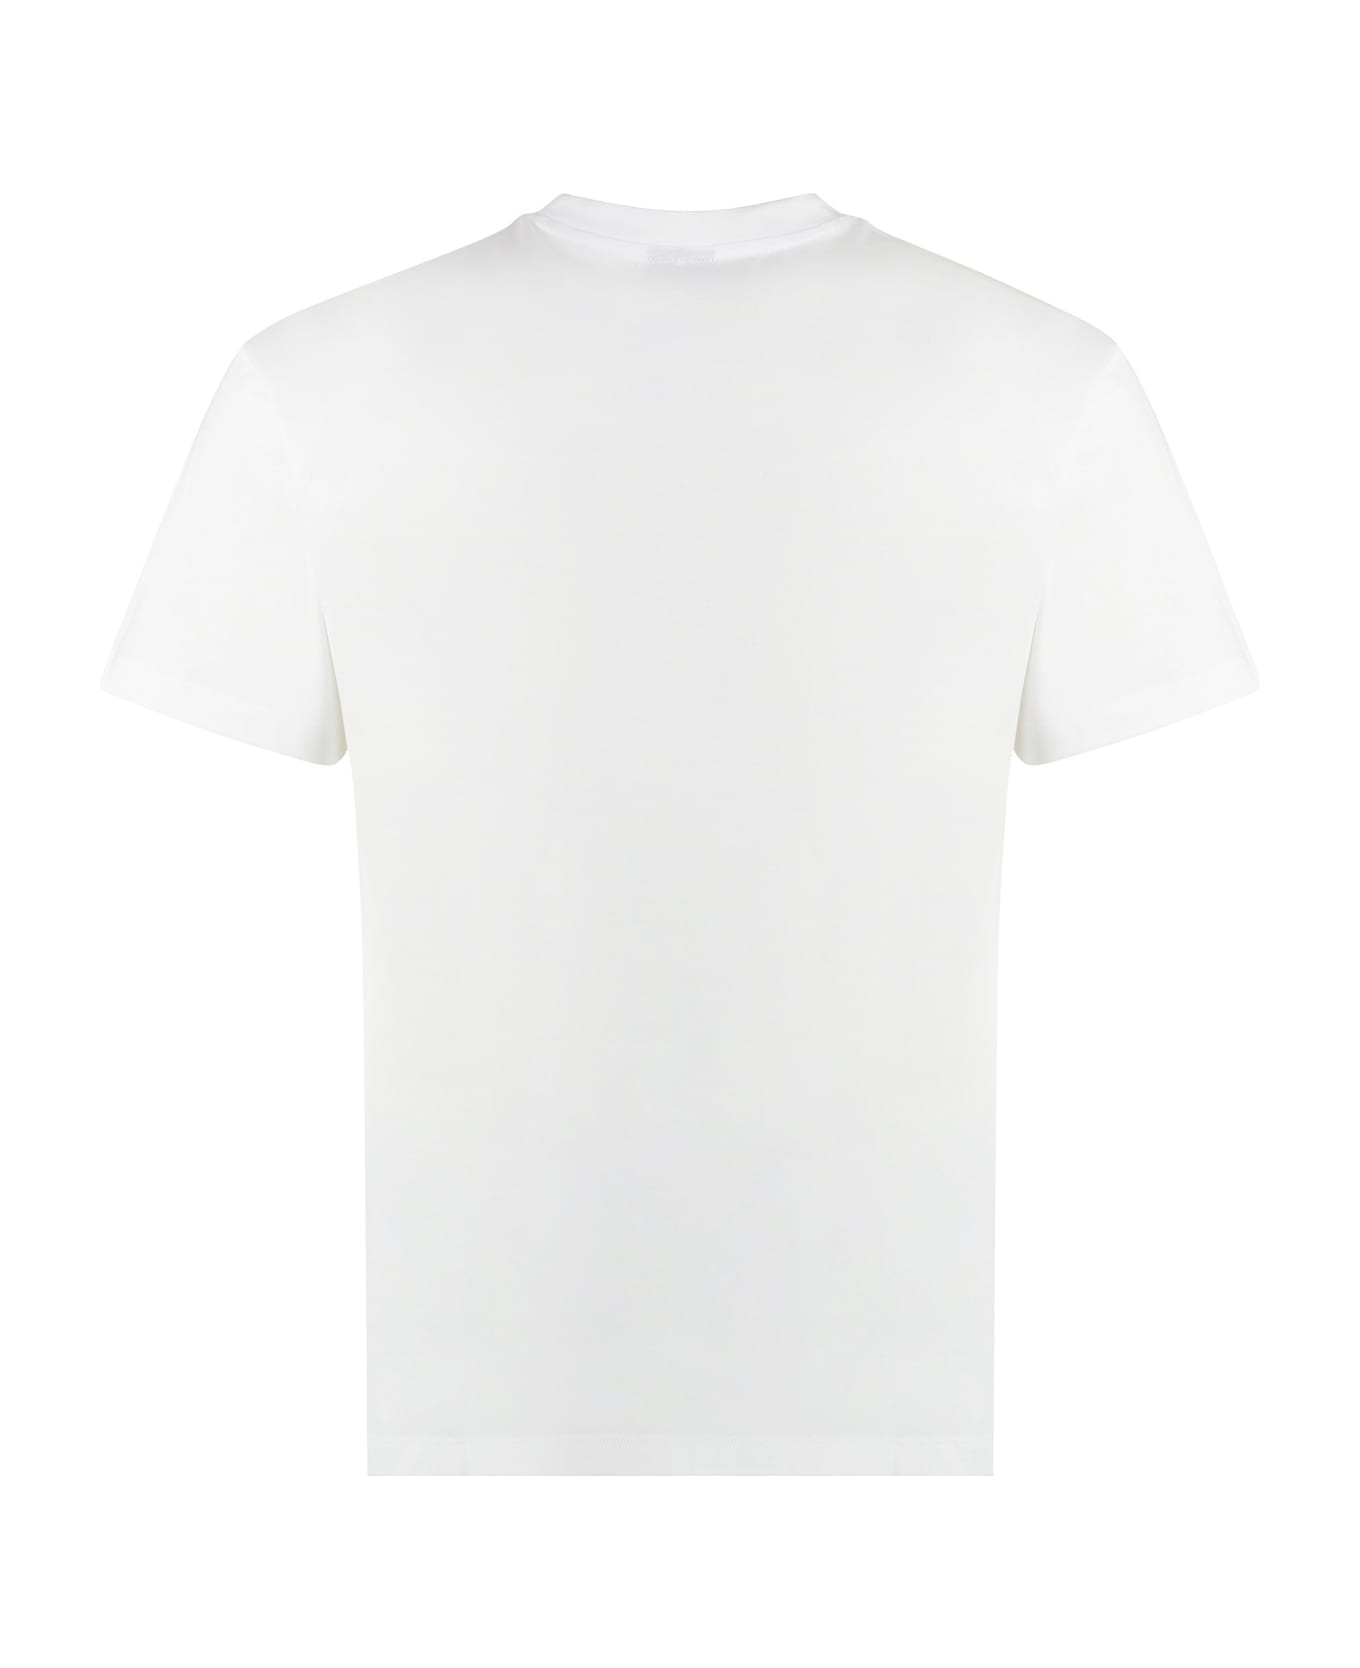 Paul&Shark Logo Cotton T-shirt - WHITE/BLUE